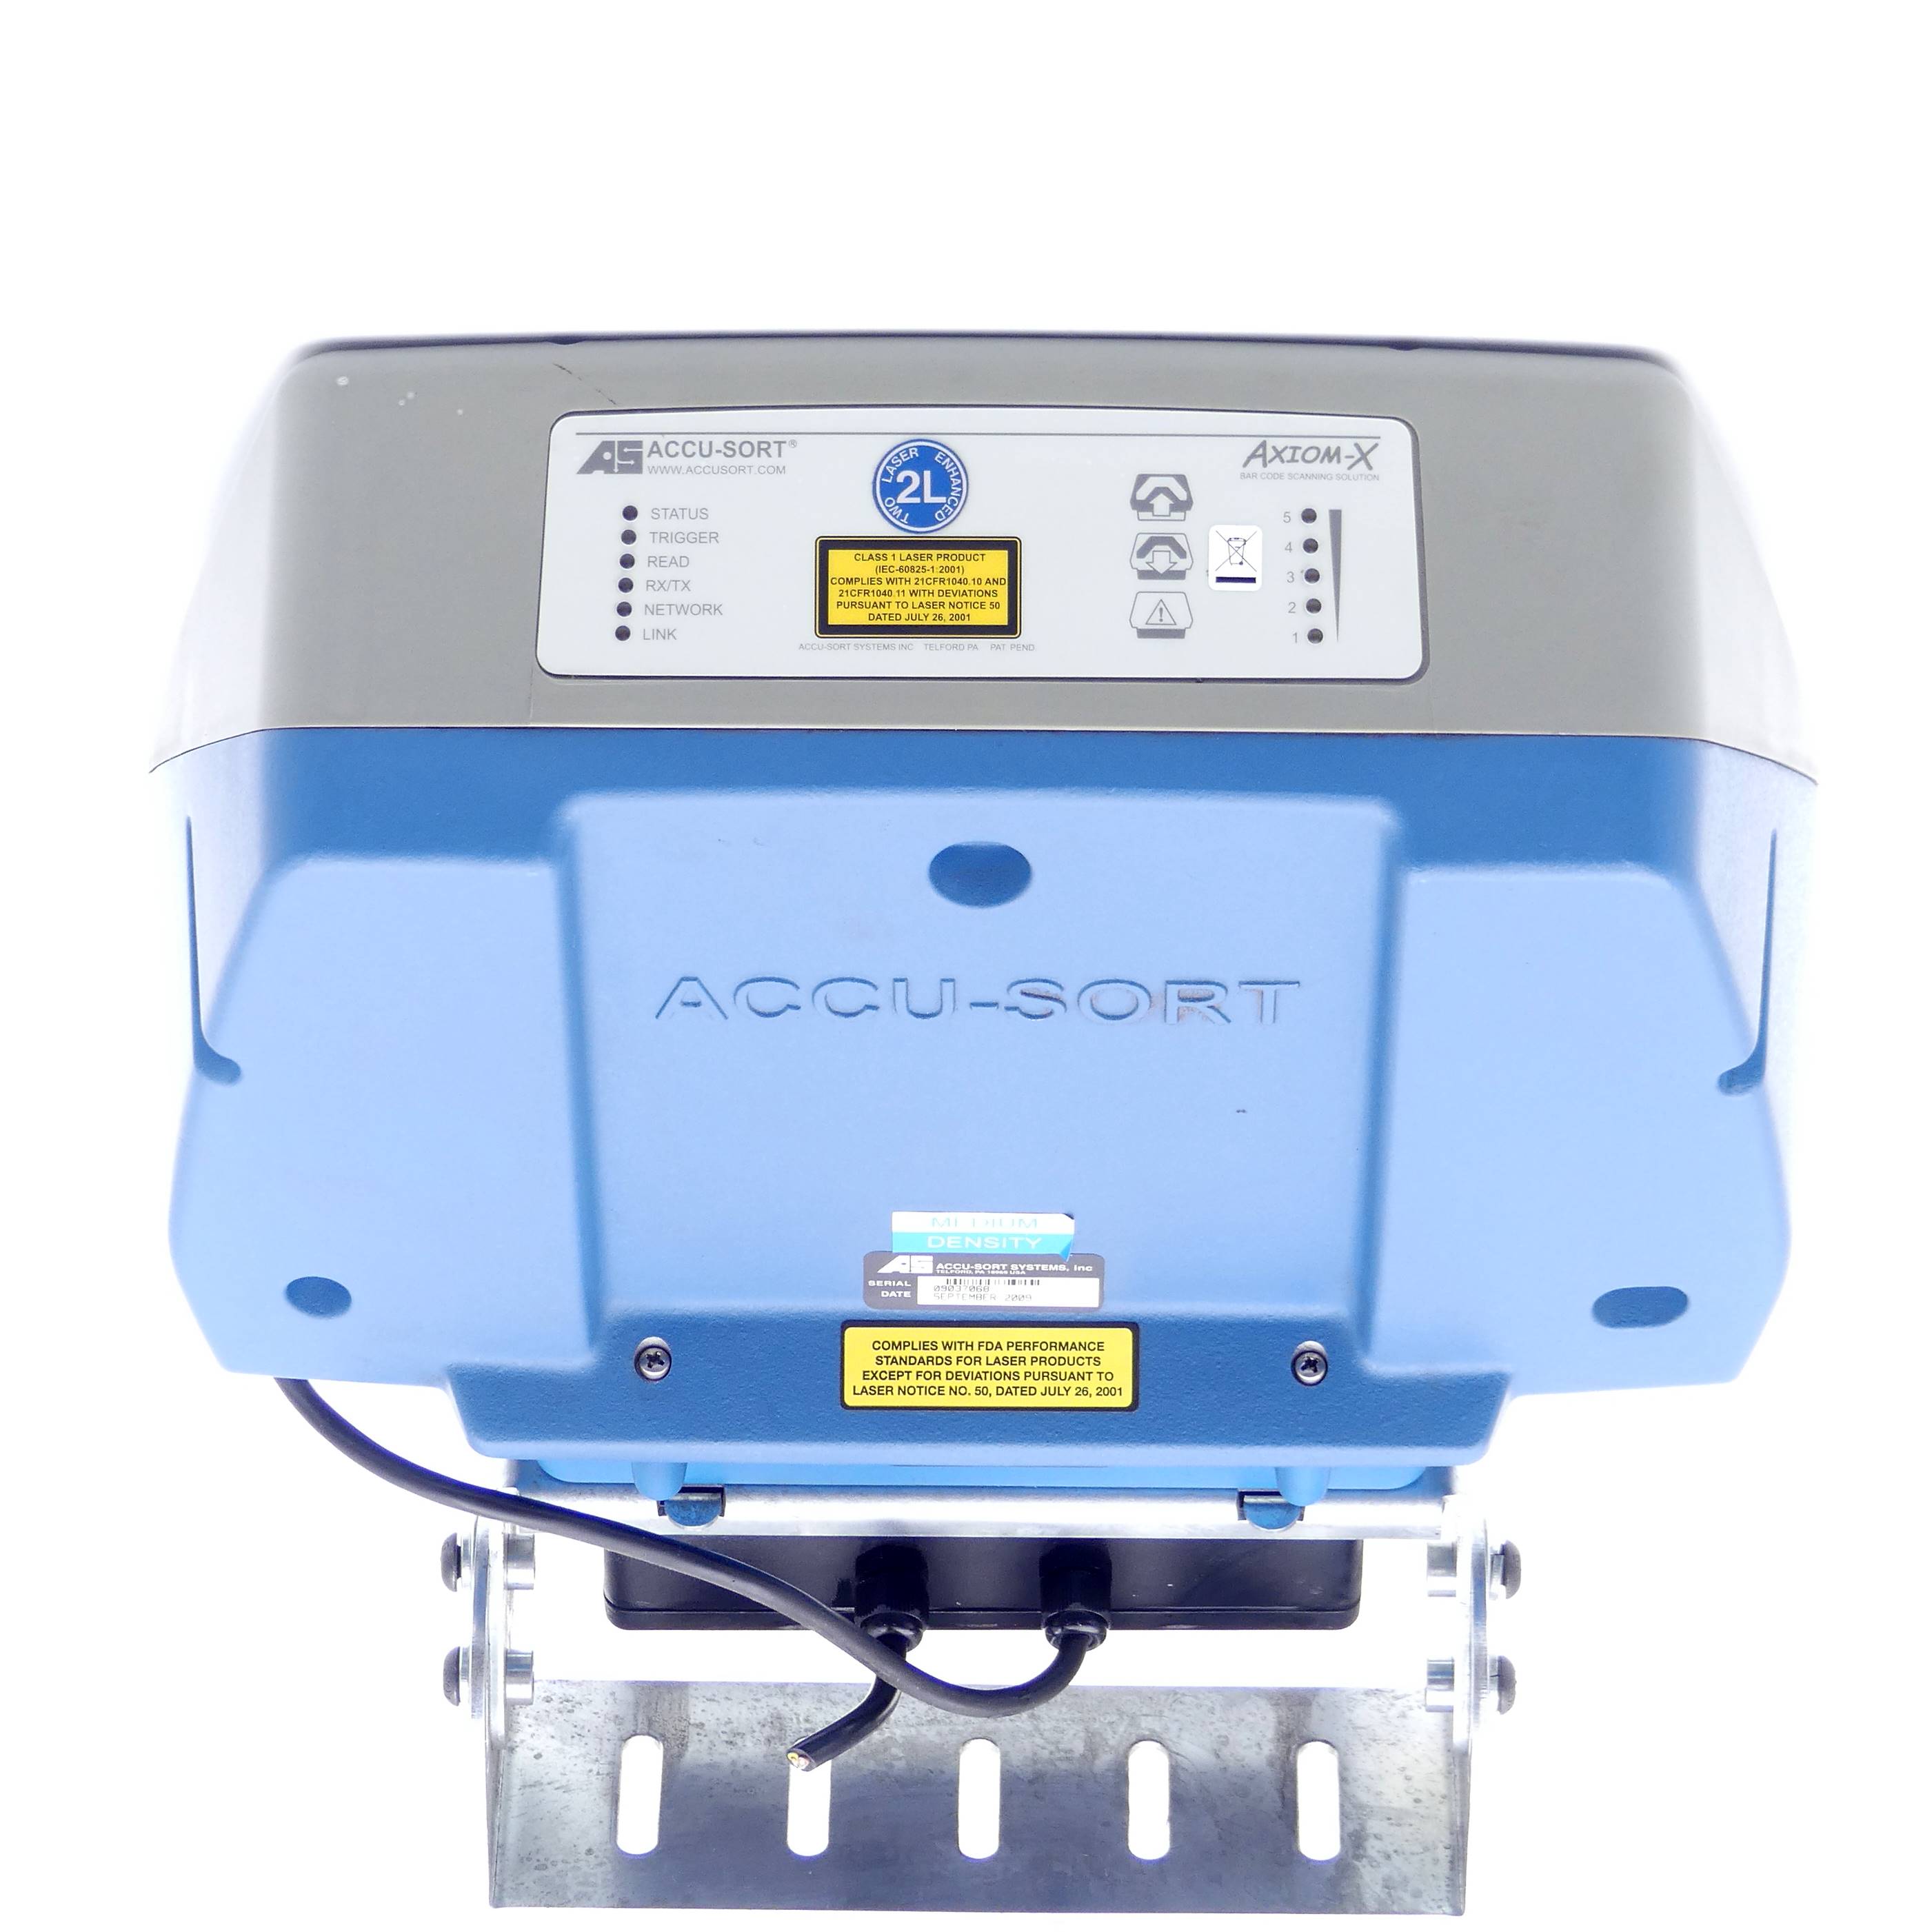 AS Accu-sort Axiom-x Barcode scanner 2 L 